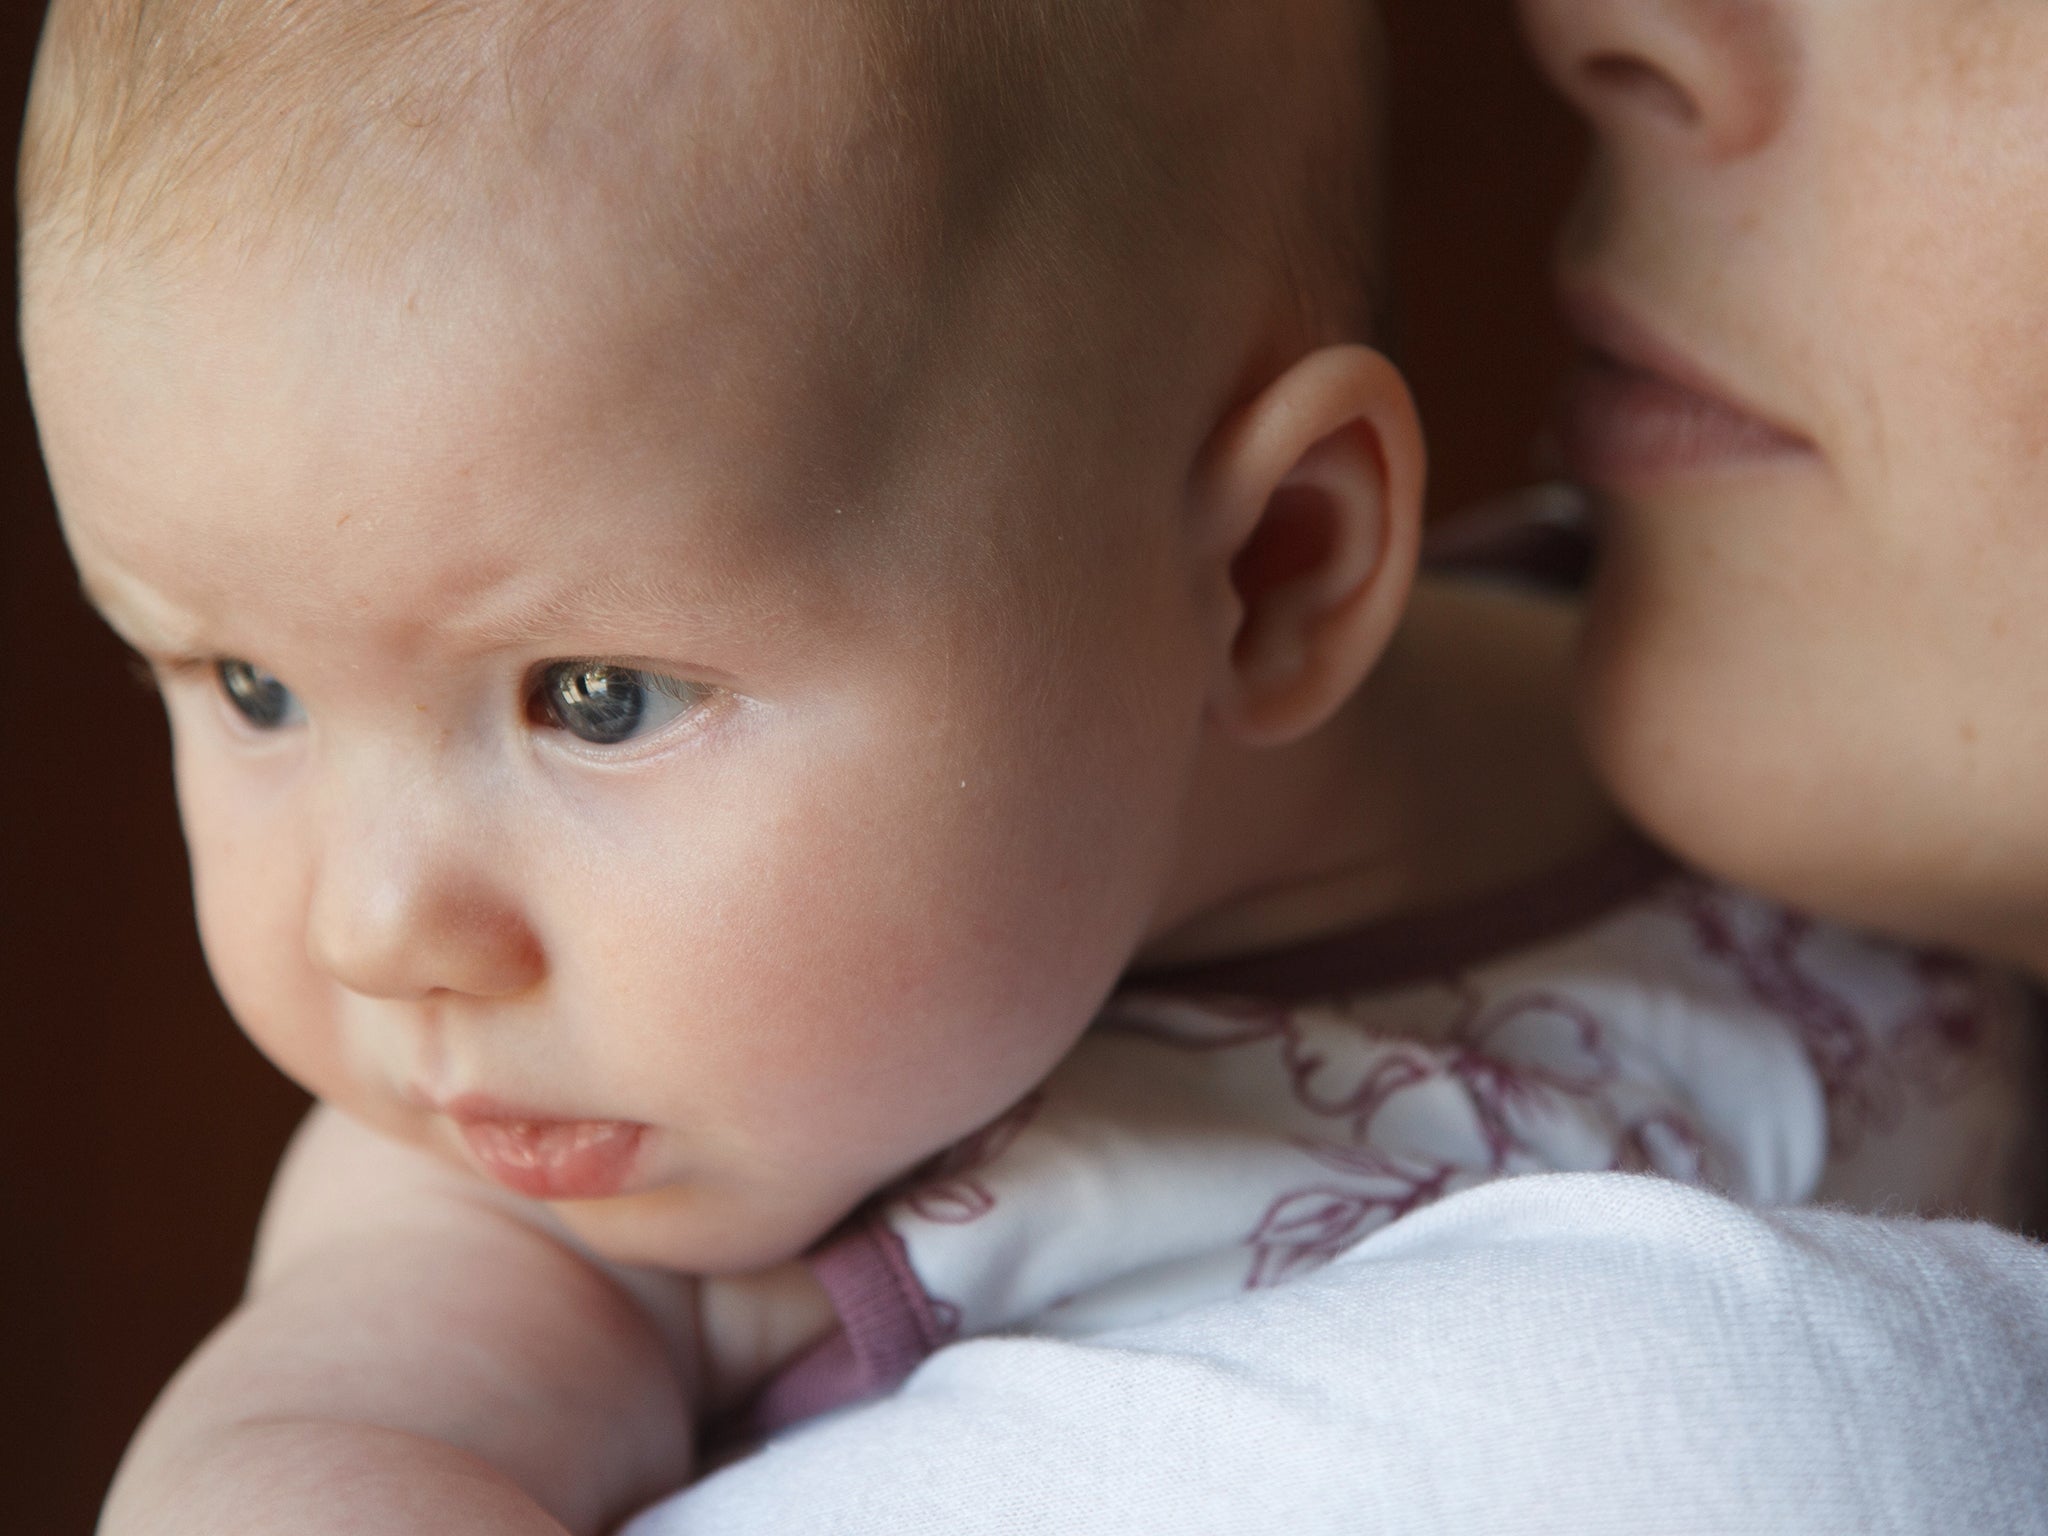 Women often feel emotional soon after giving birth